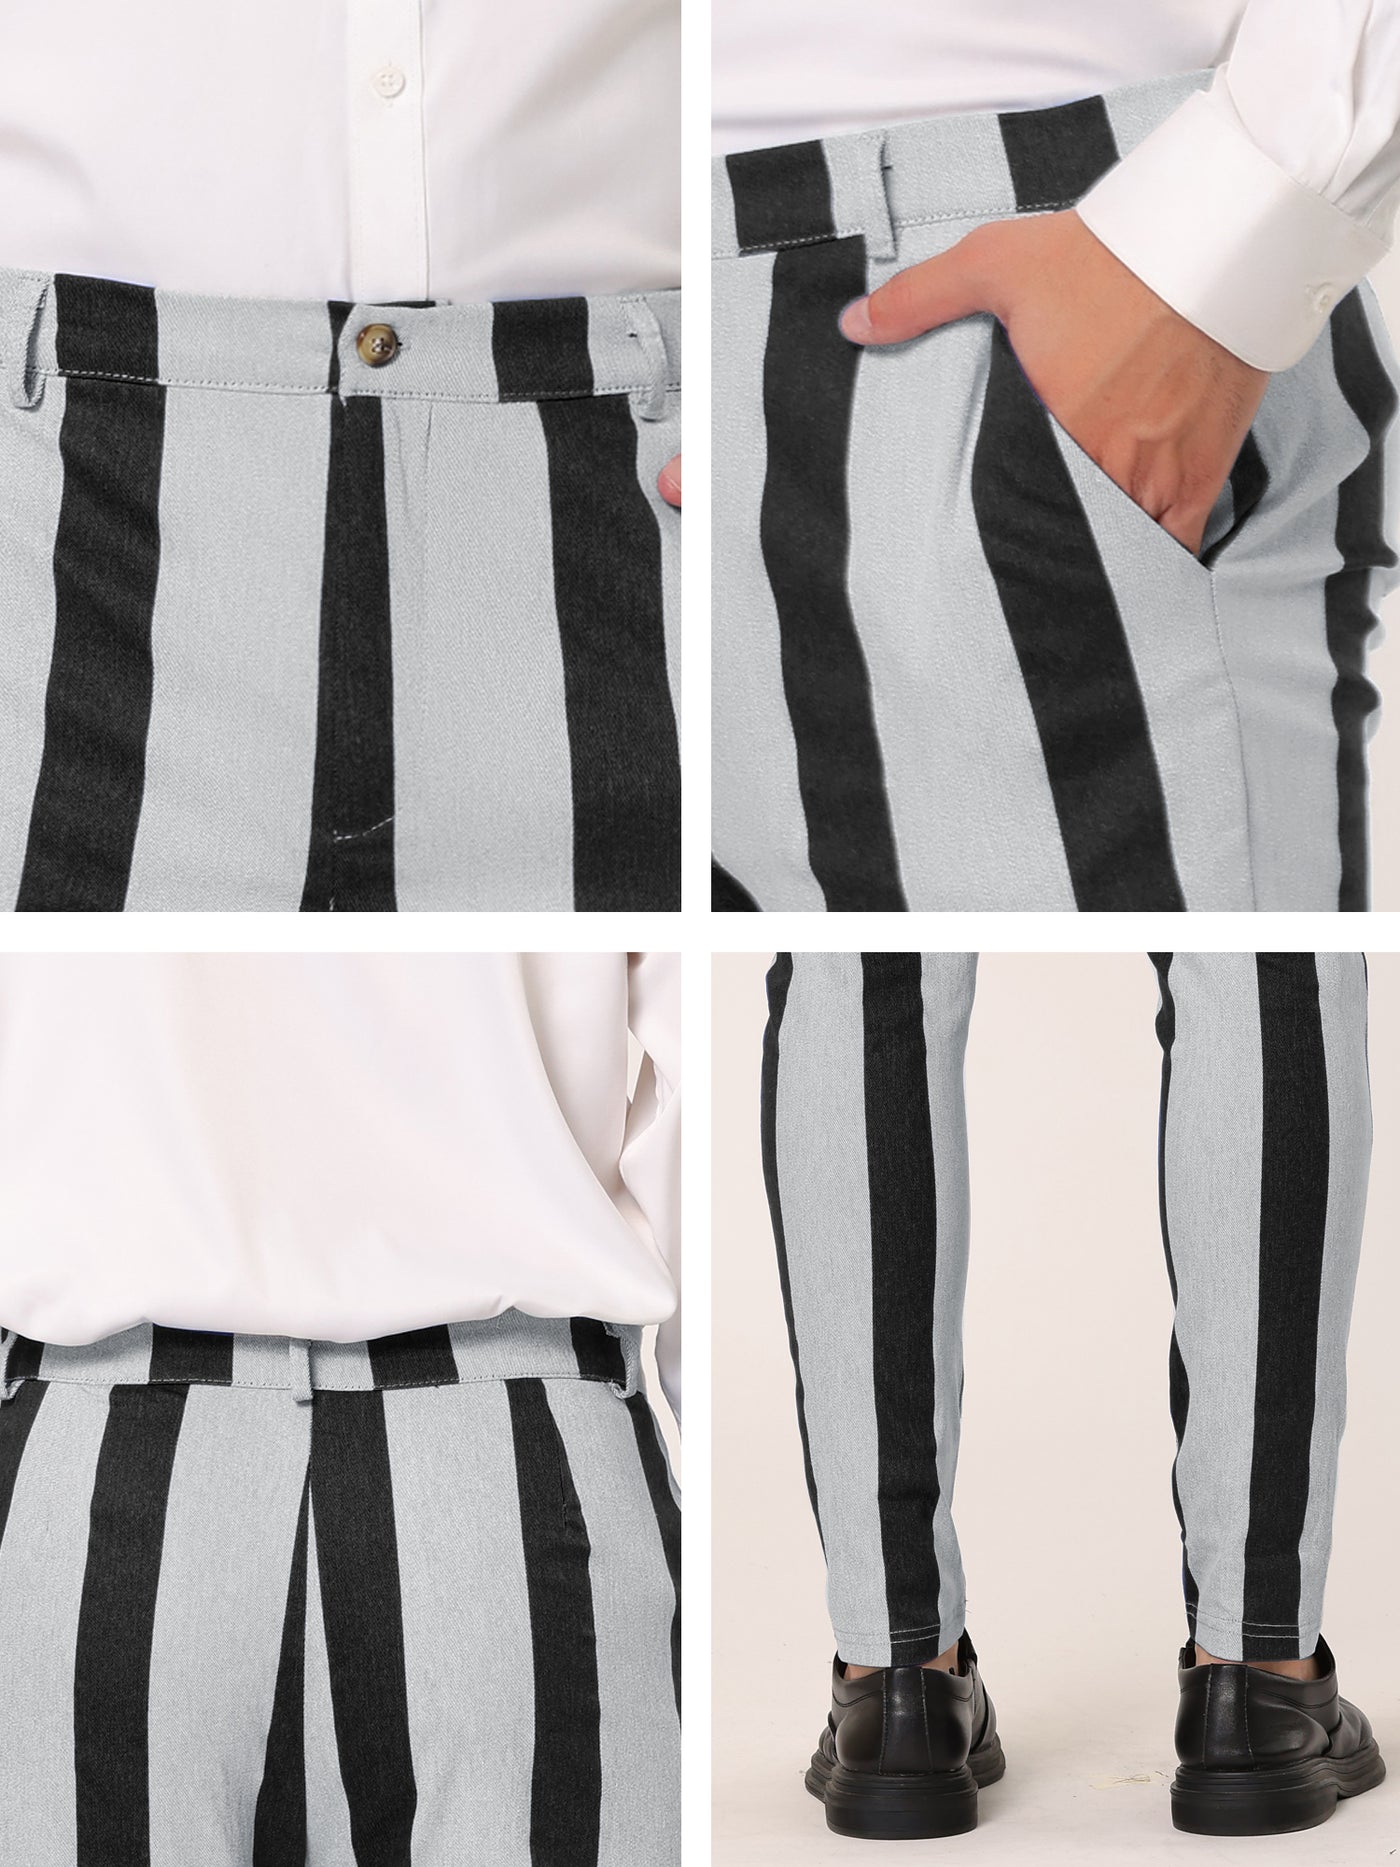 Bublédon Stylish Striped Flat Front Formal Dress Pants